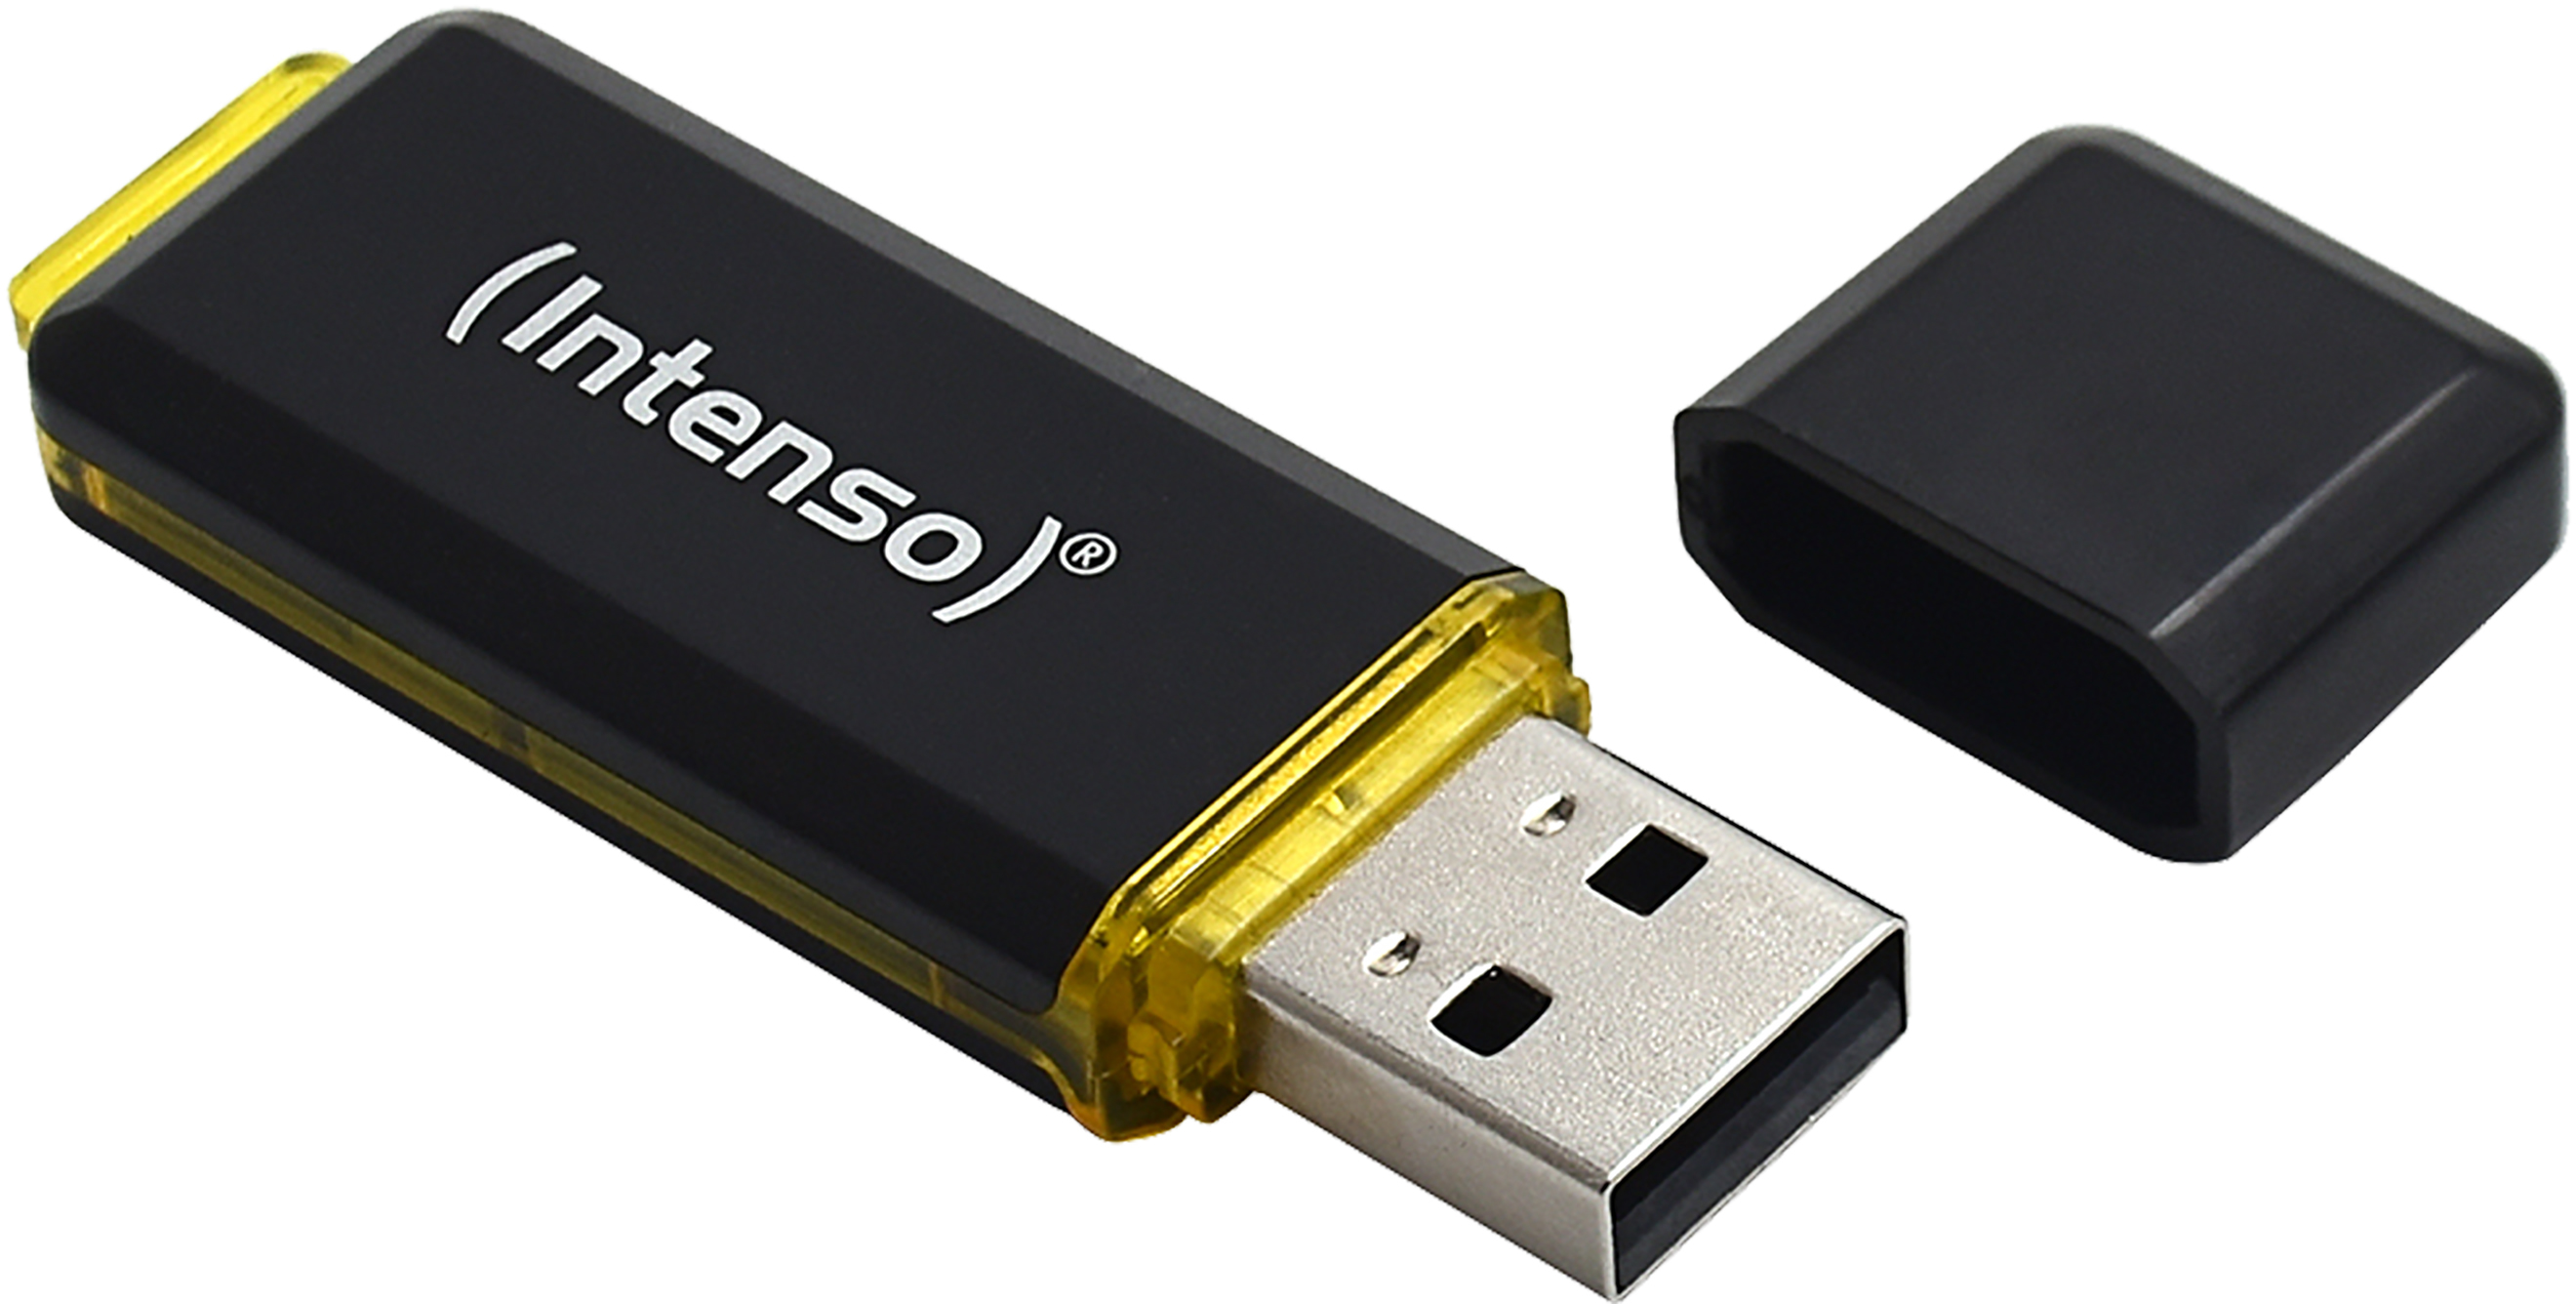 INTENSO 3.1 HIGH SPEED Schwarz/Gelb USB-Stick, 128 GB, MB/s, 250